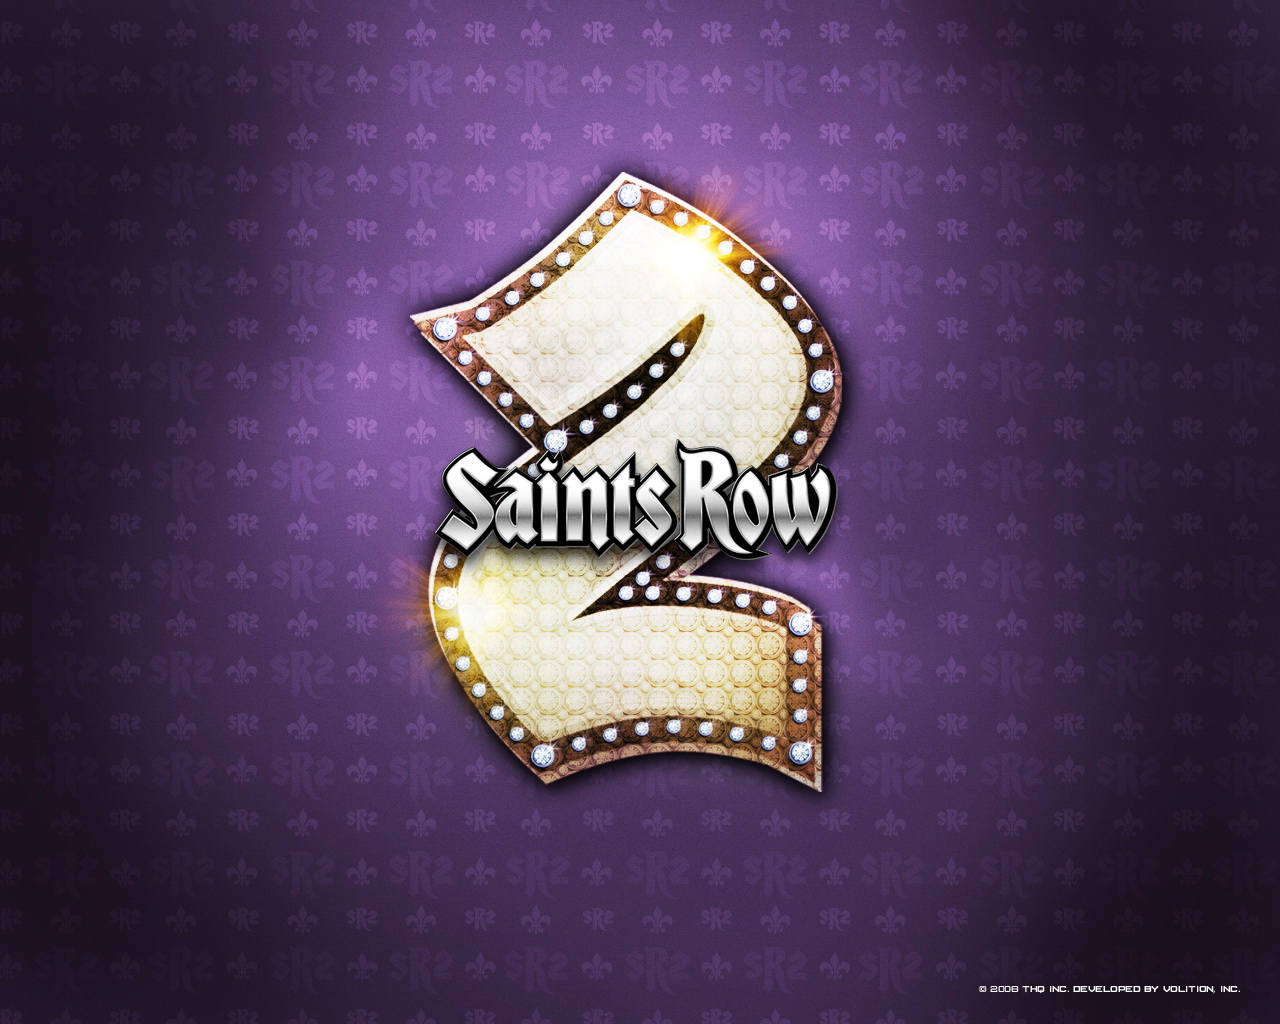 Saints Row 2 Wallpapers